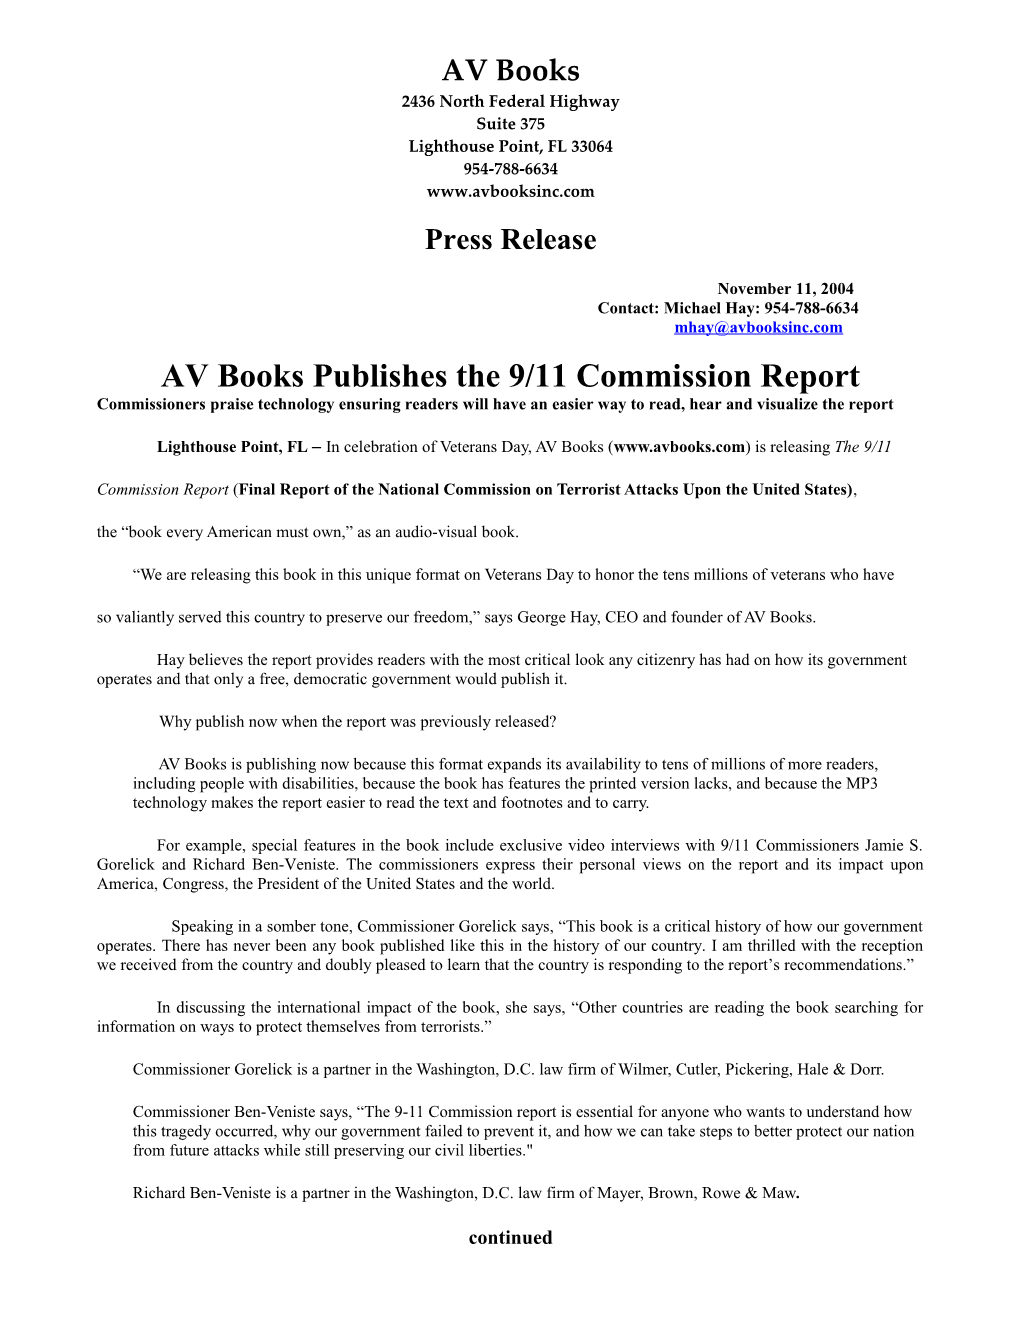 AV Books to Publish the 9/11 Commission Report